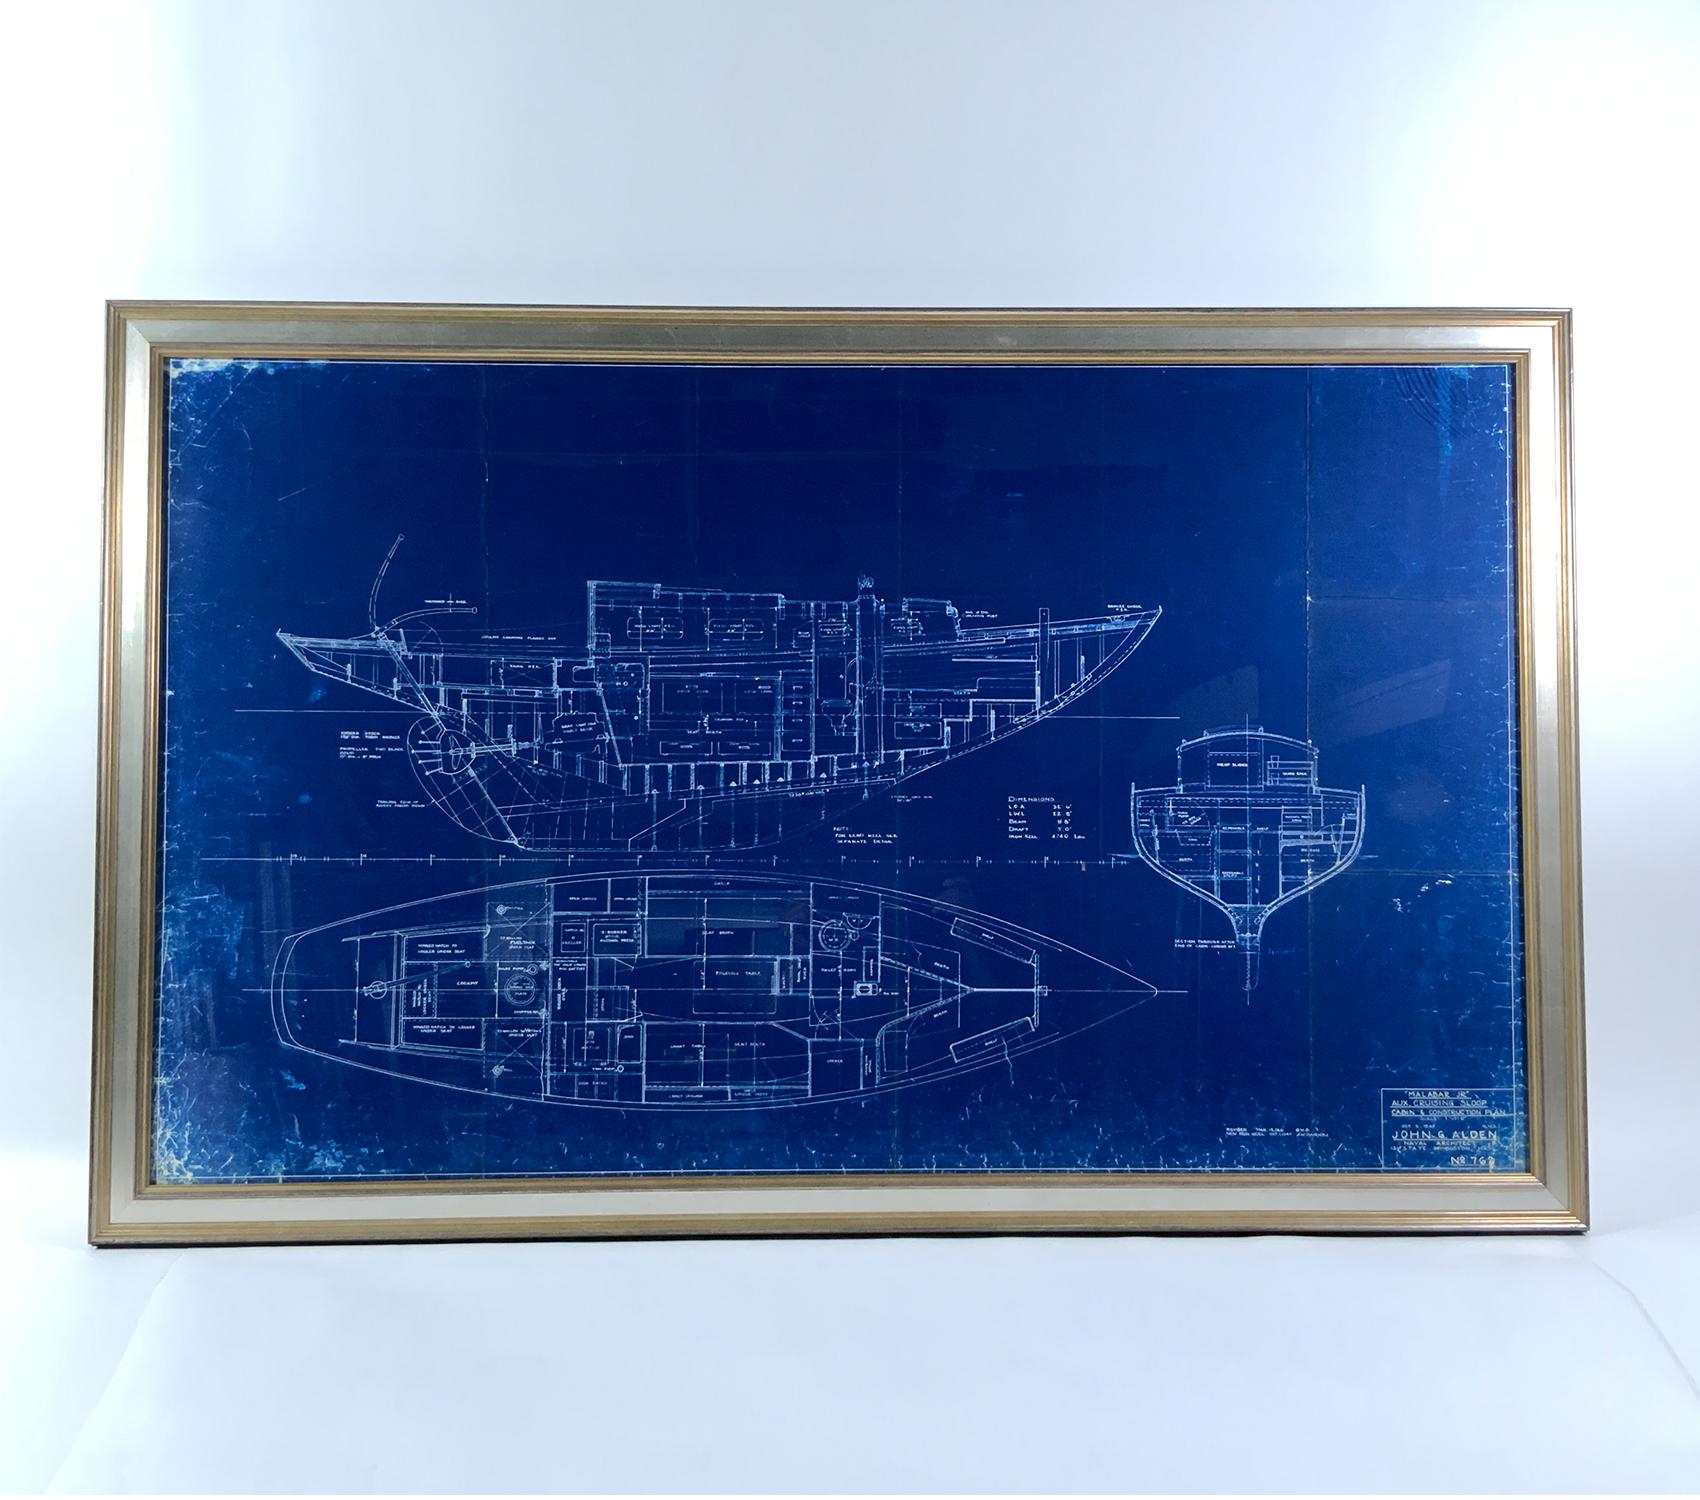 Outstanding original blueprint from John G. Alden, Naval Architects of Boston. Alden is where the 